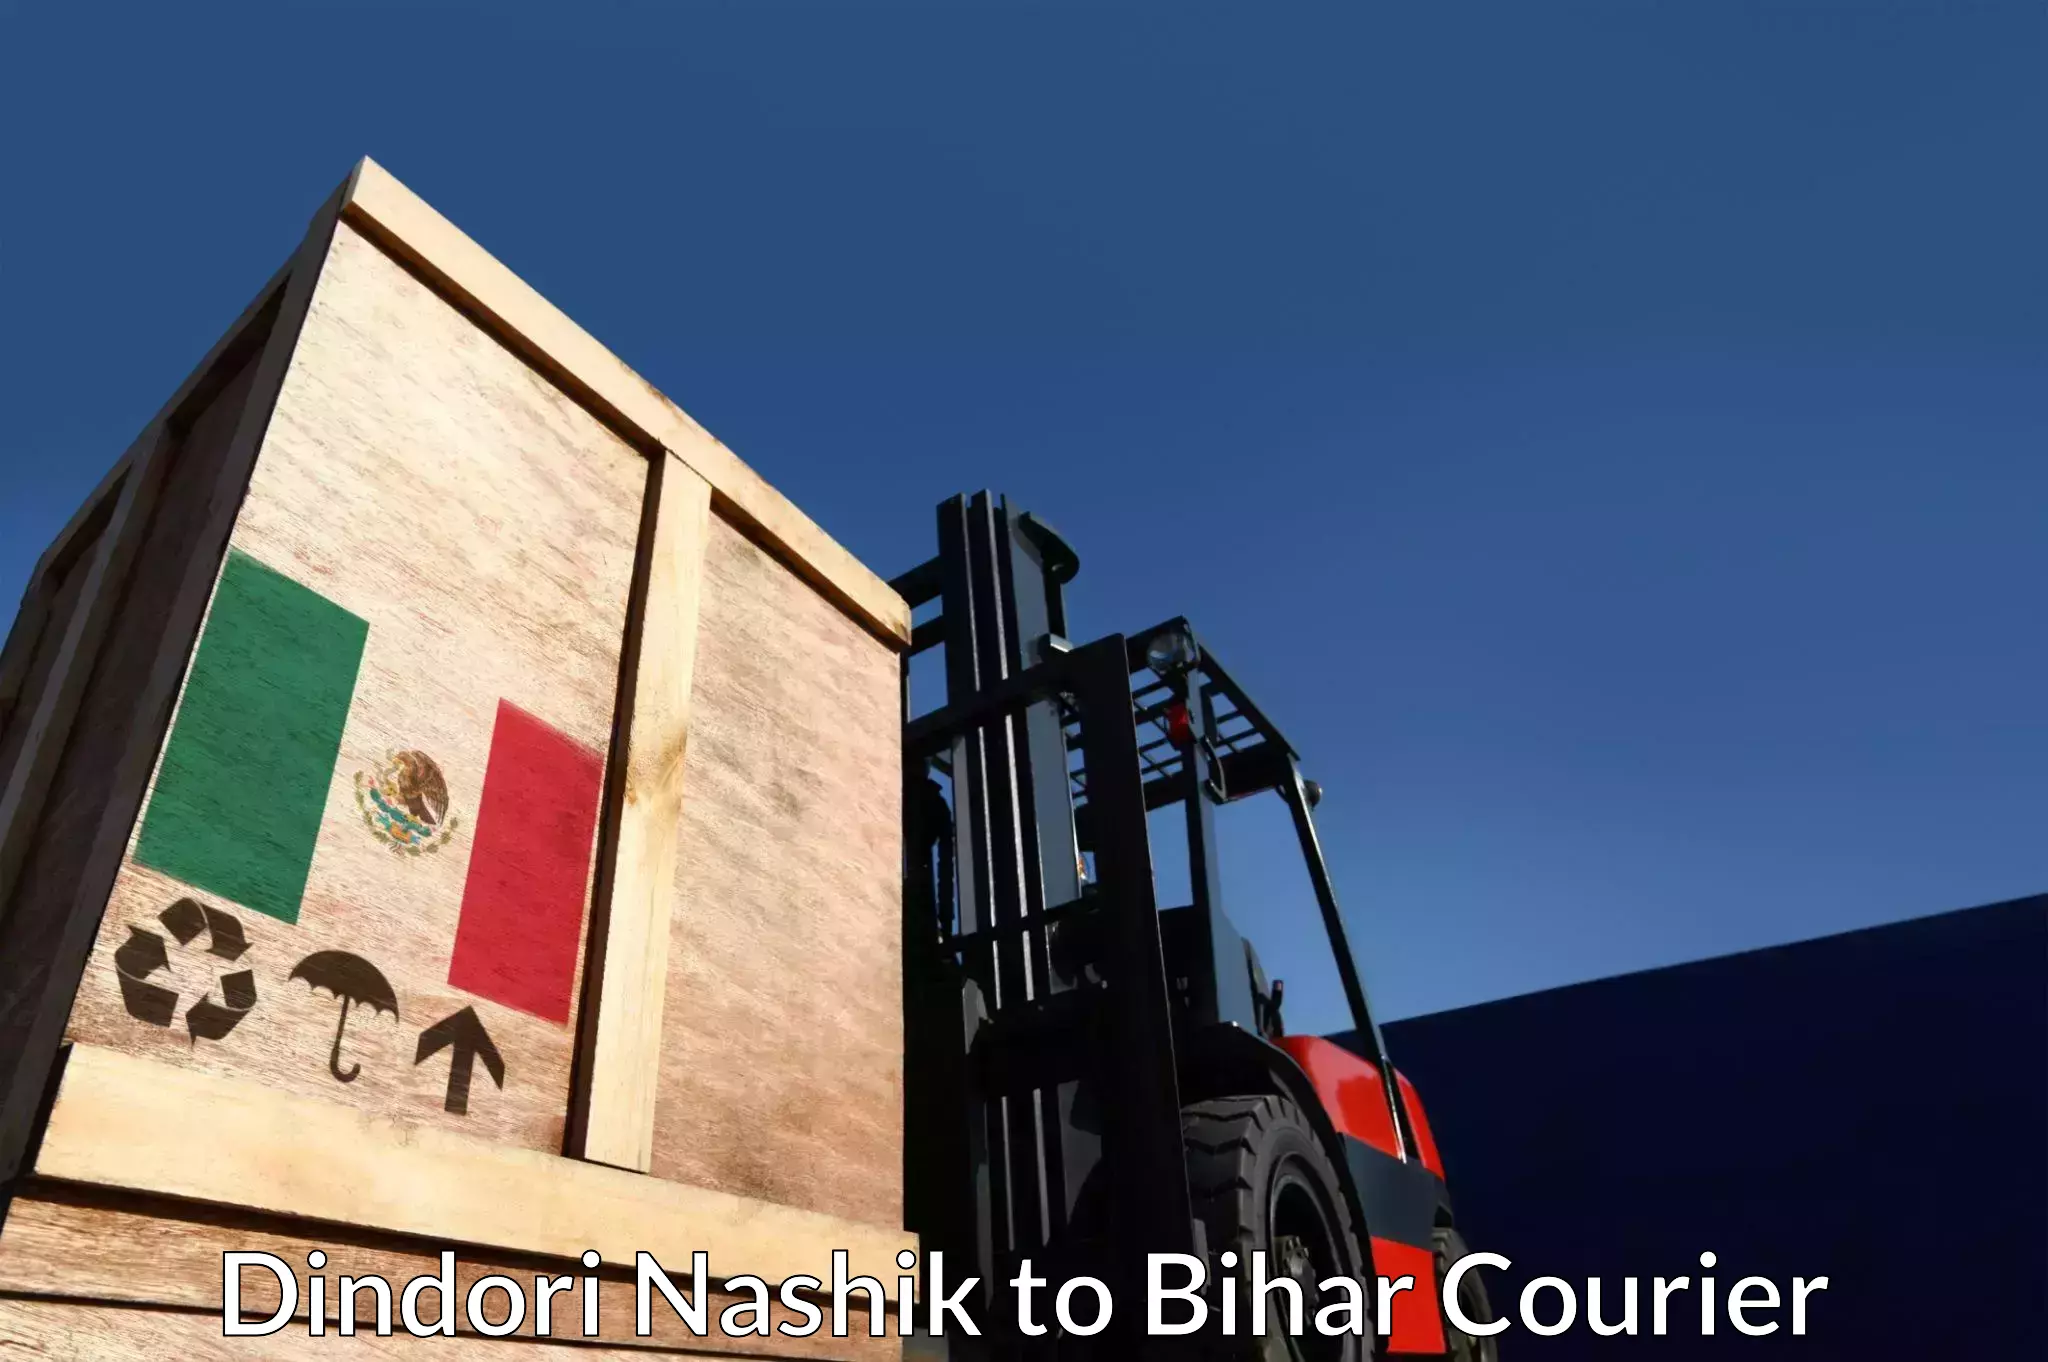 Courier service booking Dindori Nashik to Bihar